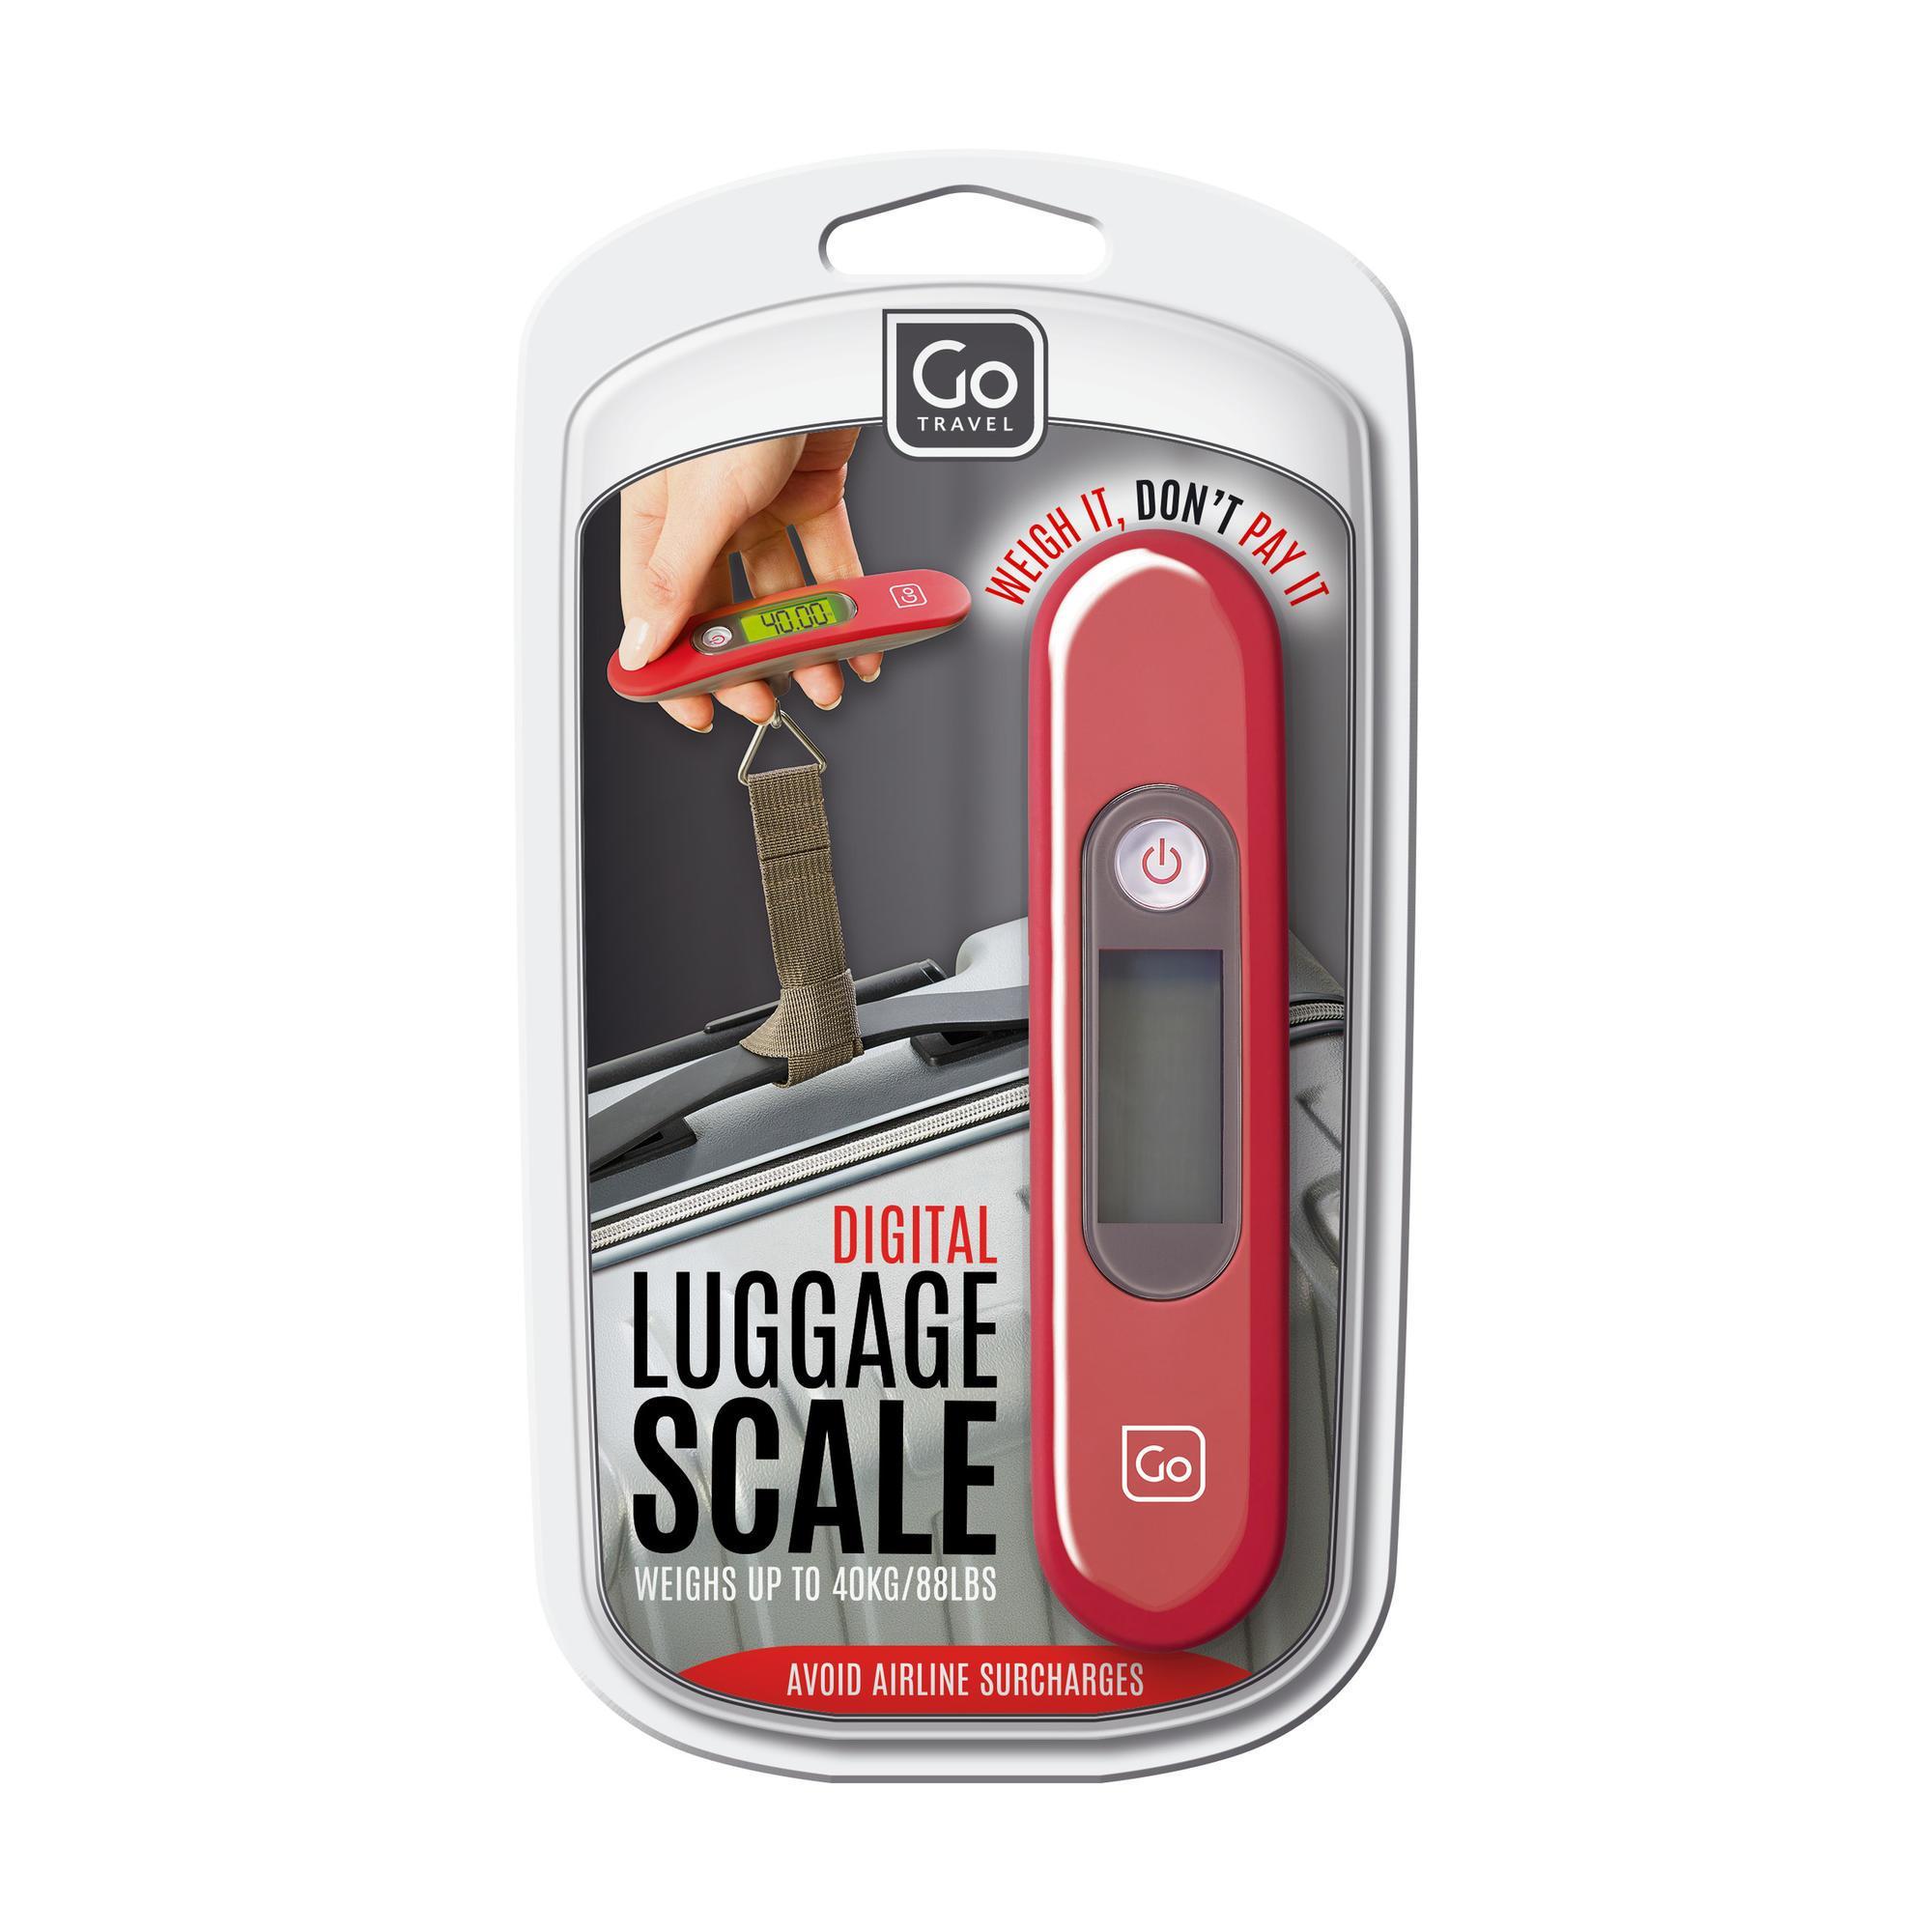 Trekking digital luggage scales GO 